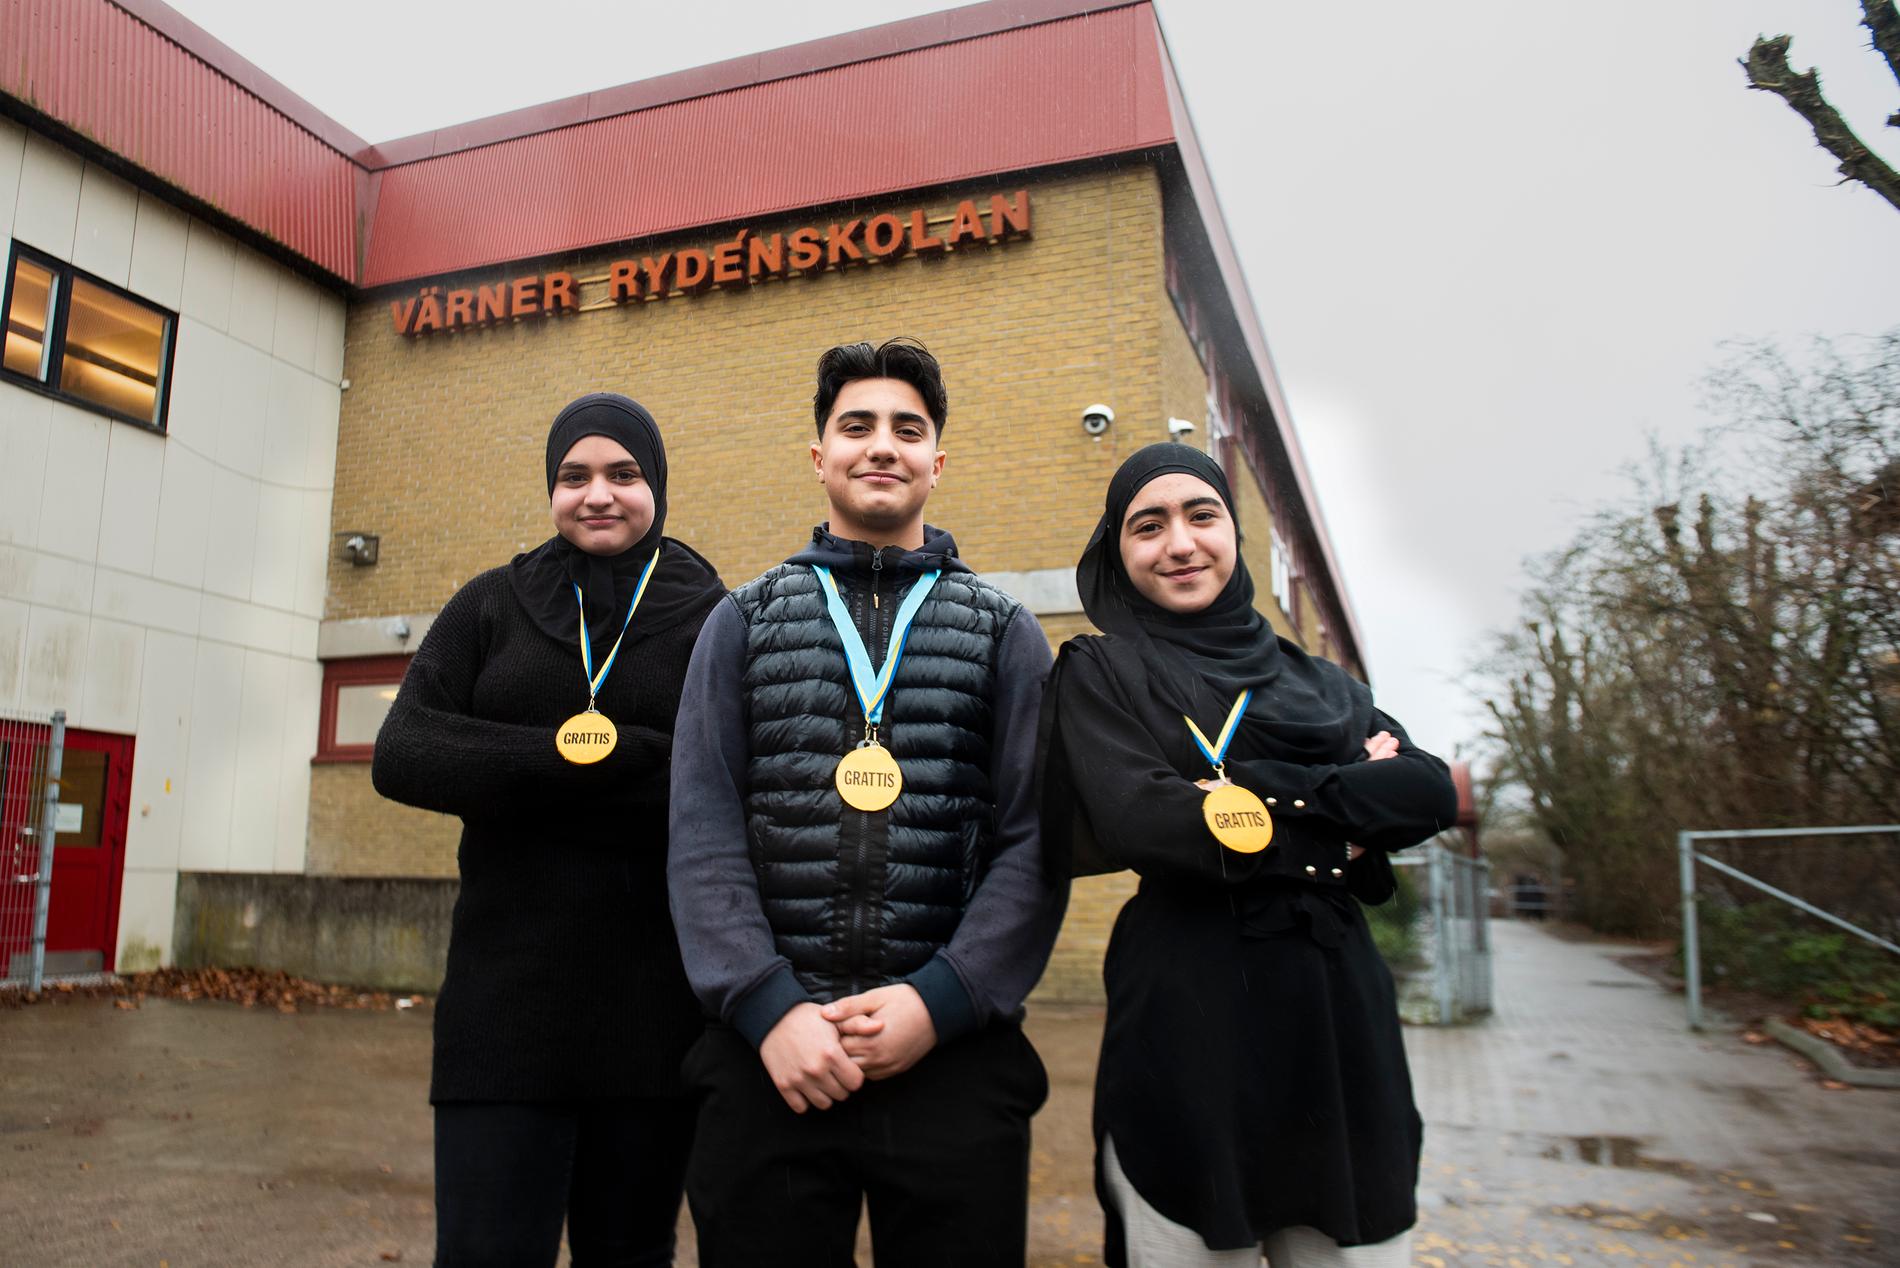  Ibtisam Jaber, Zain Tayeh och Zainab Eliwy på Värner Rydénskolan vinner Unga journalistpriset 2022. 